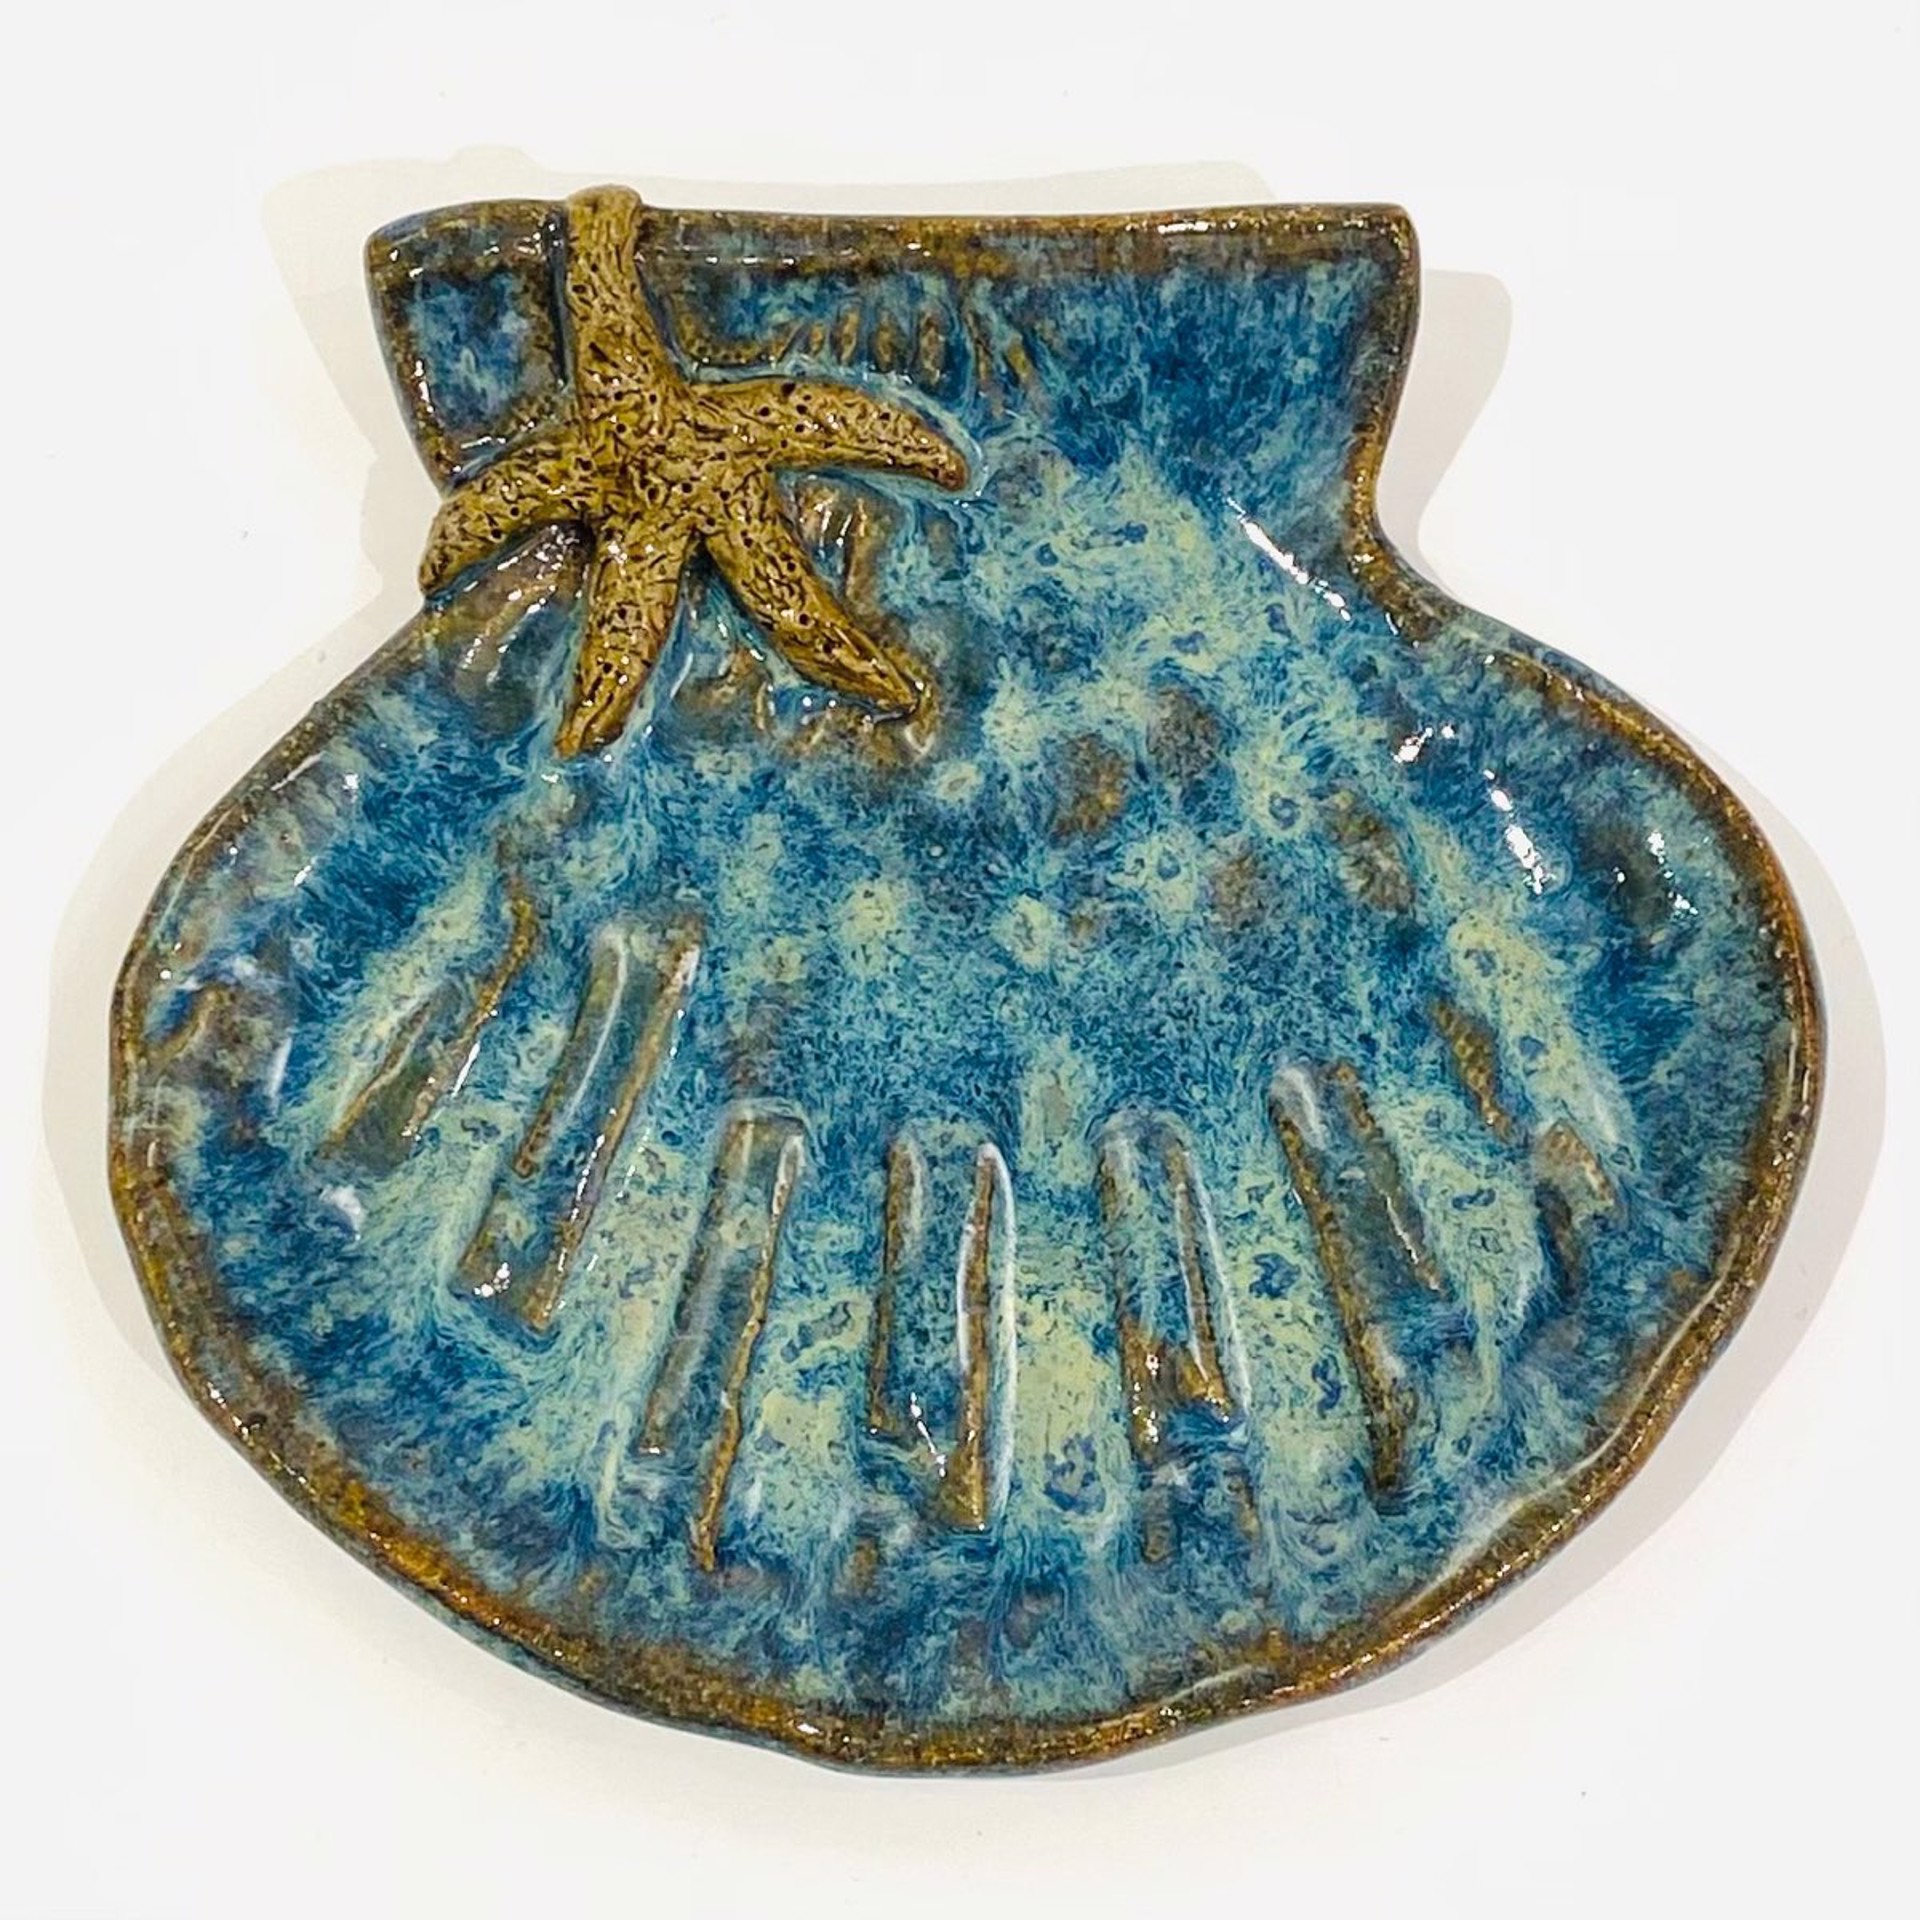 LG22-925 Shell Dish with Starfish (Blue Glaze) by Jim & Steffi Logan